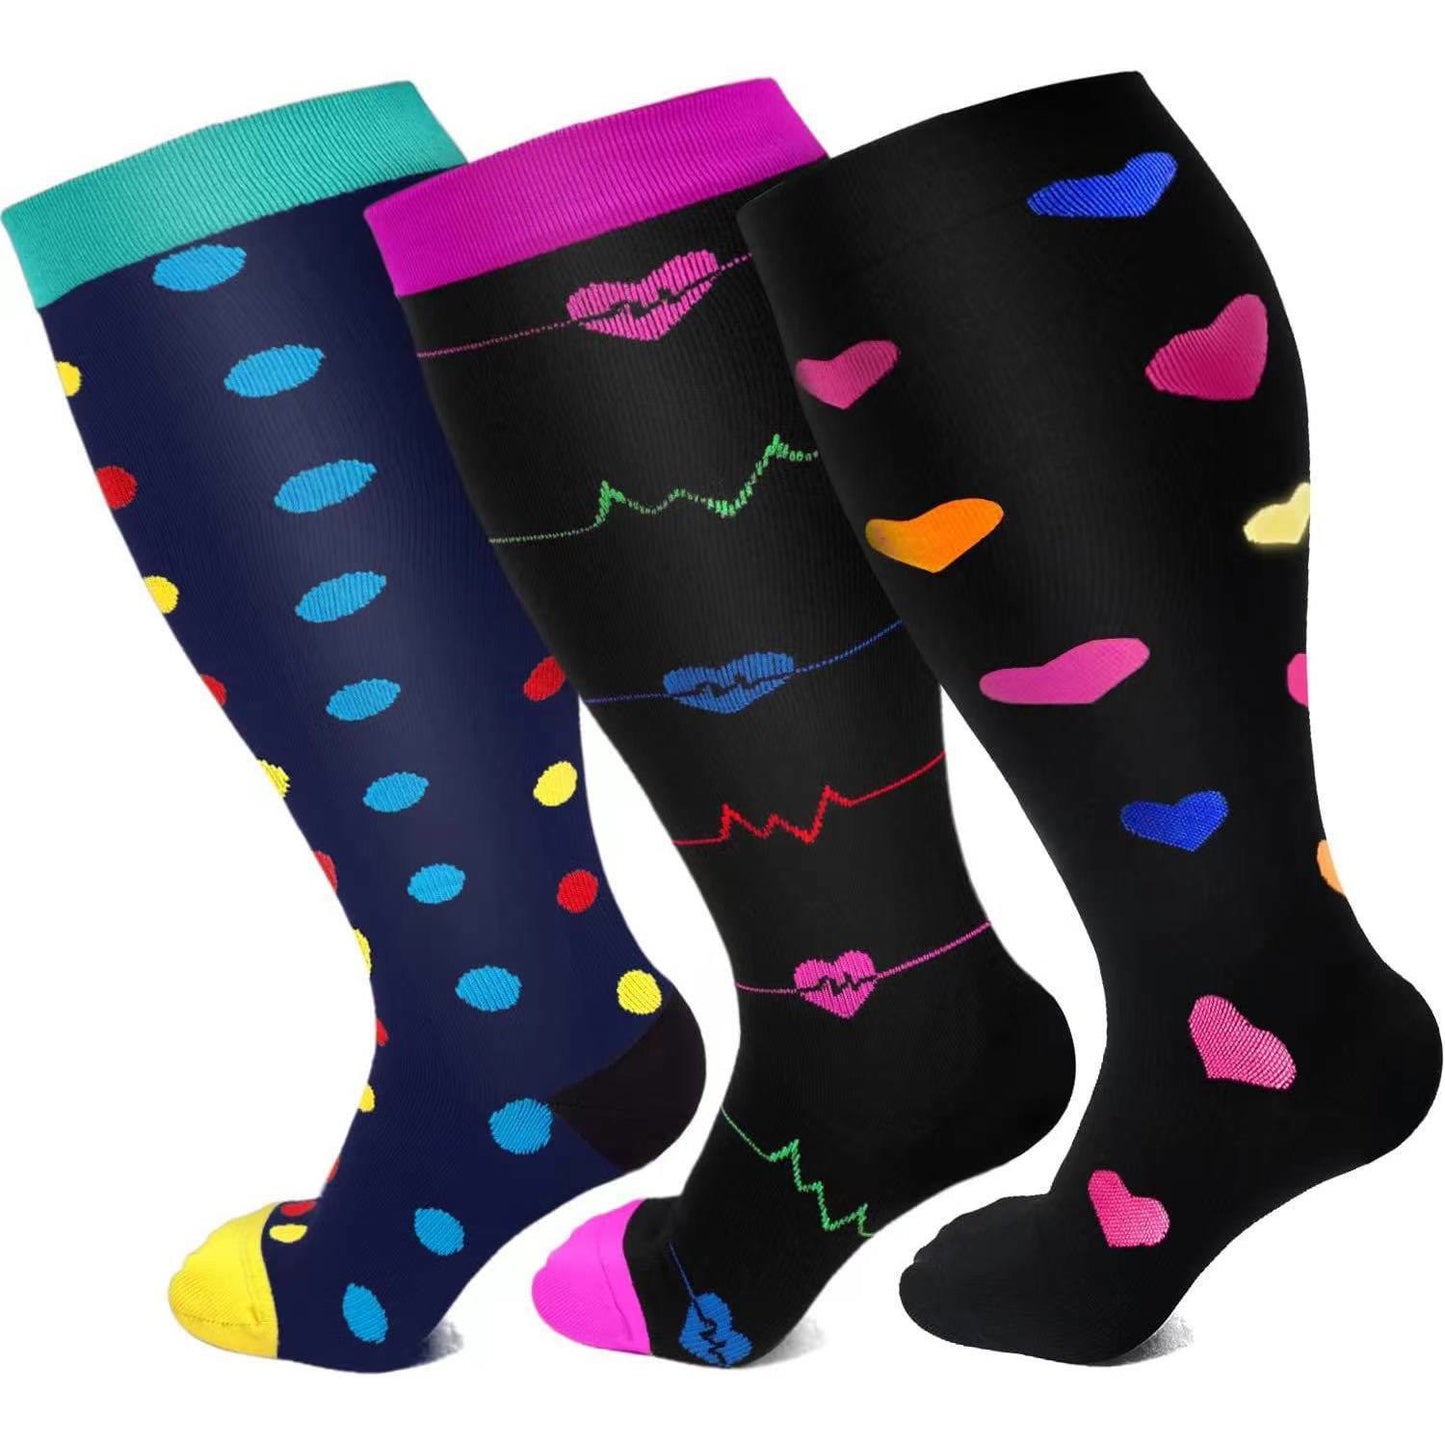 2XL-7XL Colorful Pattern Plus Size Compression Socks